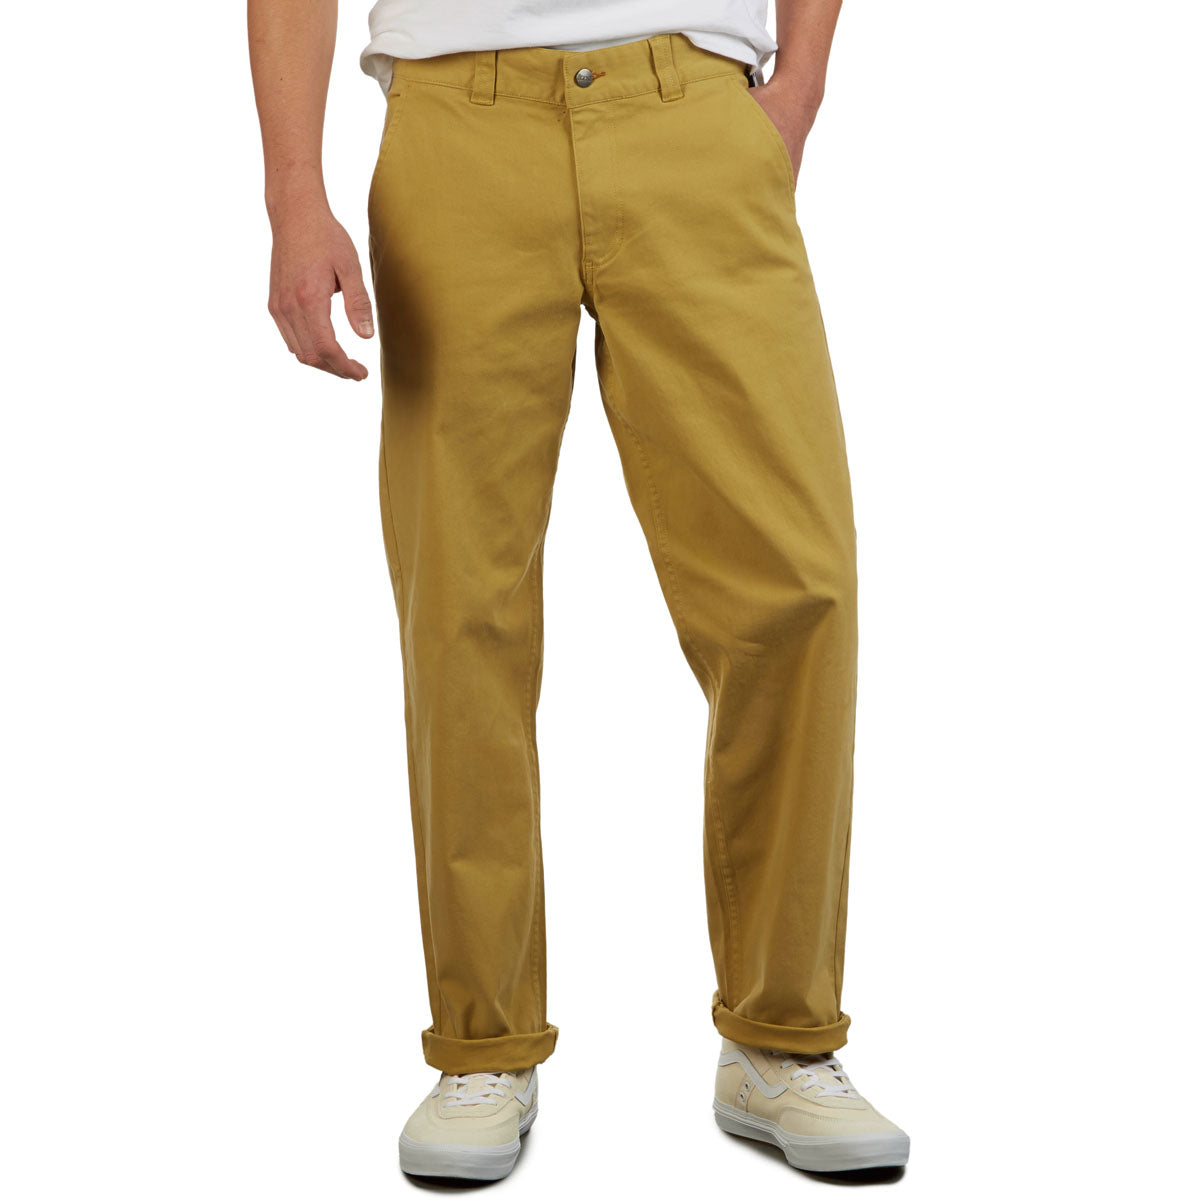 CCS Standard Plus Relaxed Chino Pants - Dark Mustard image 4